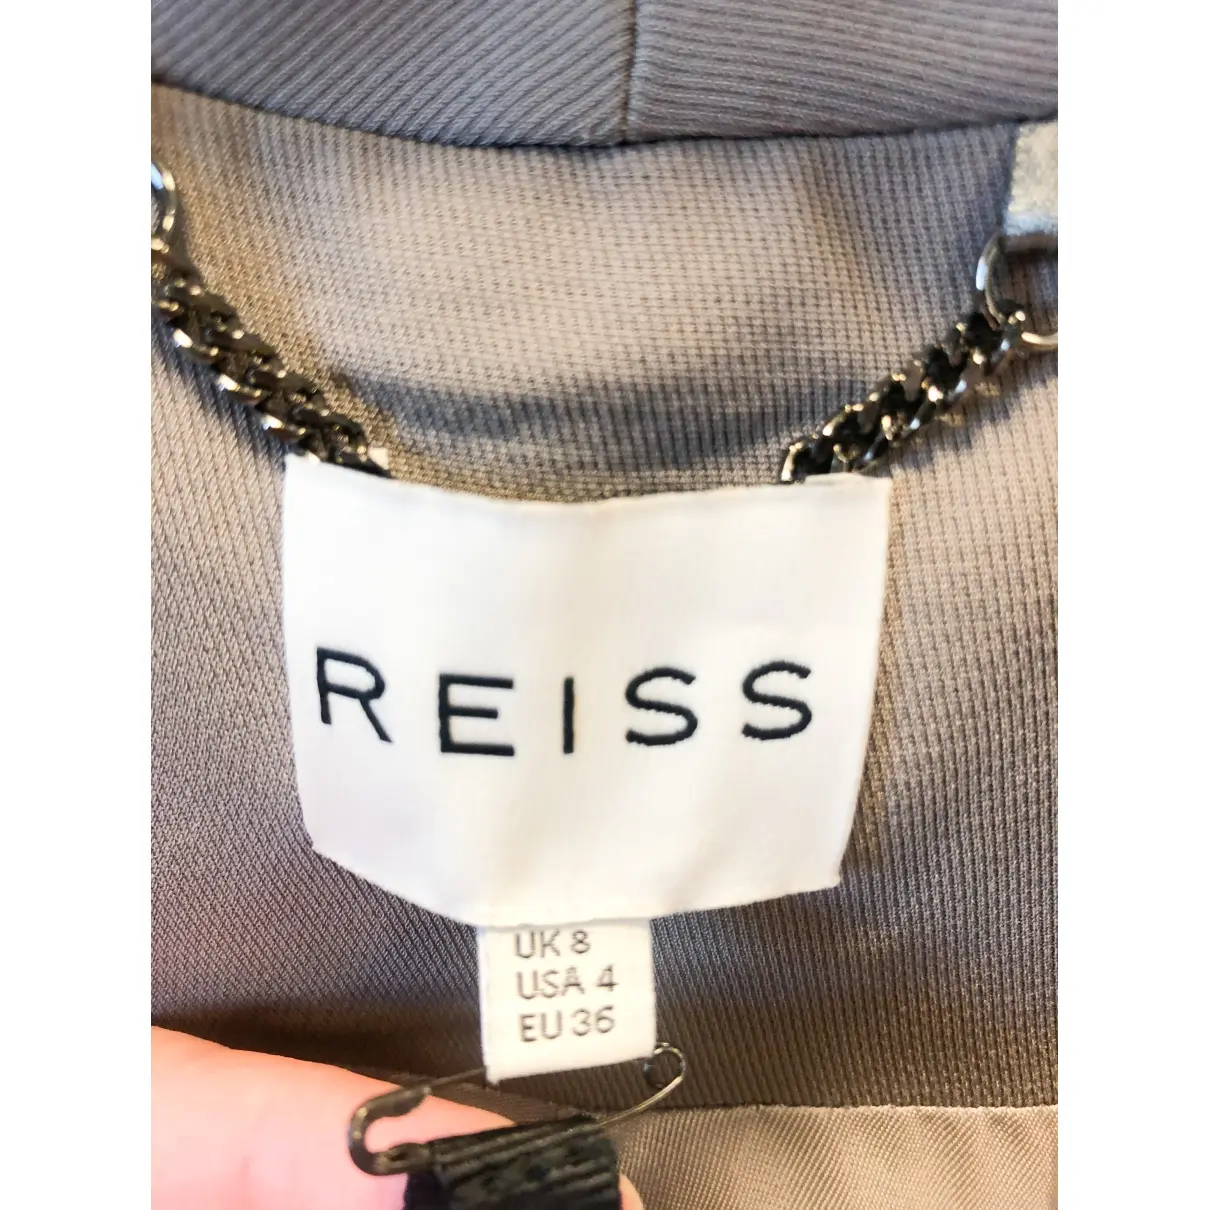 Buy Reiss Short vest online